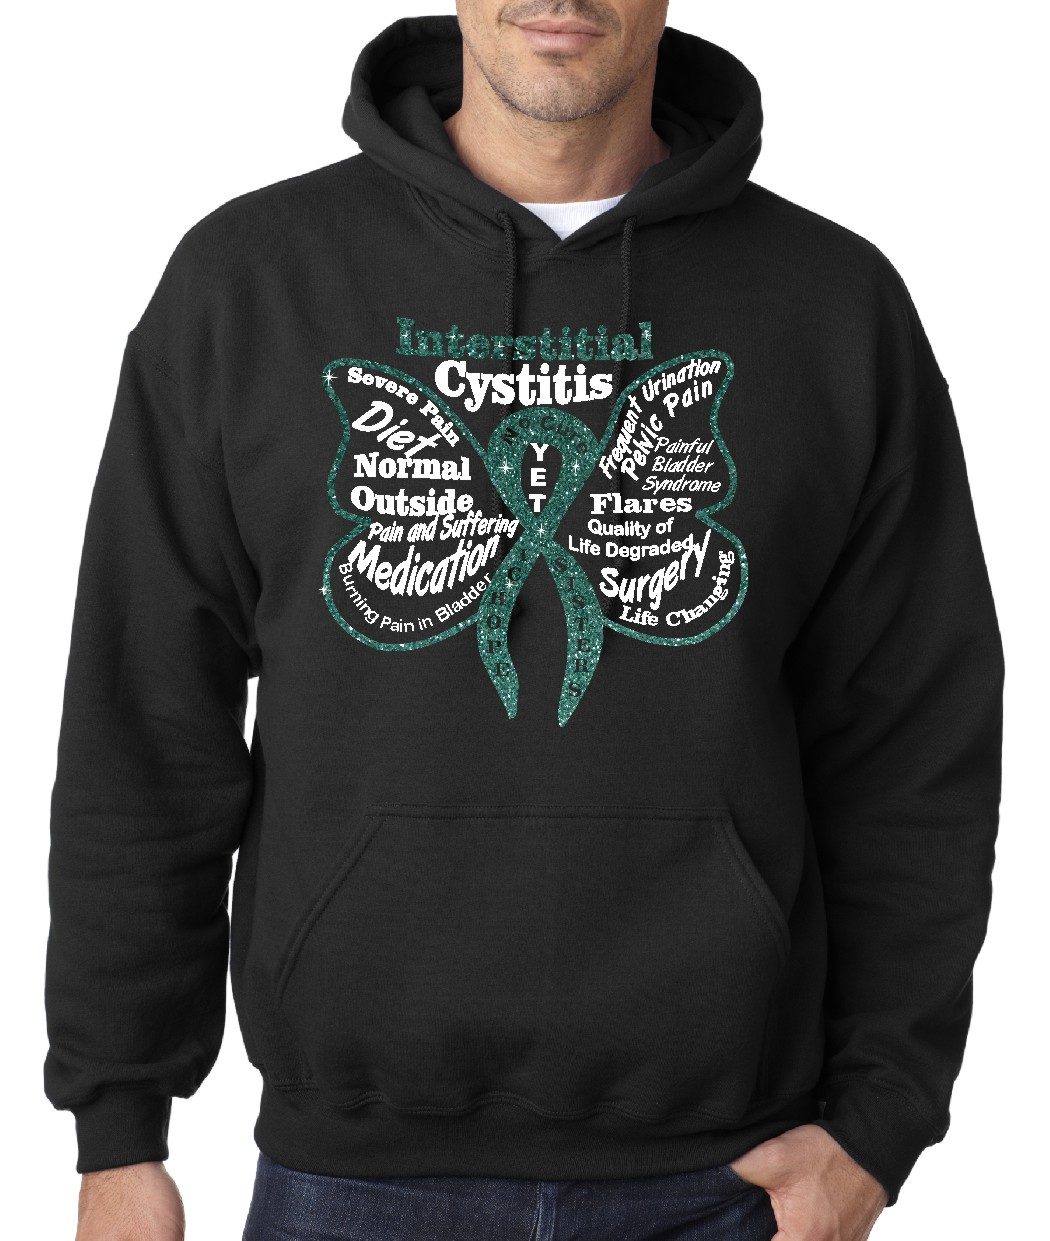 Interstitial Cystitis on black with glitterflake - hooded sweatshirt